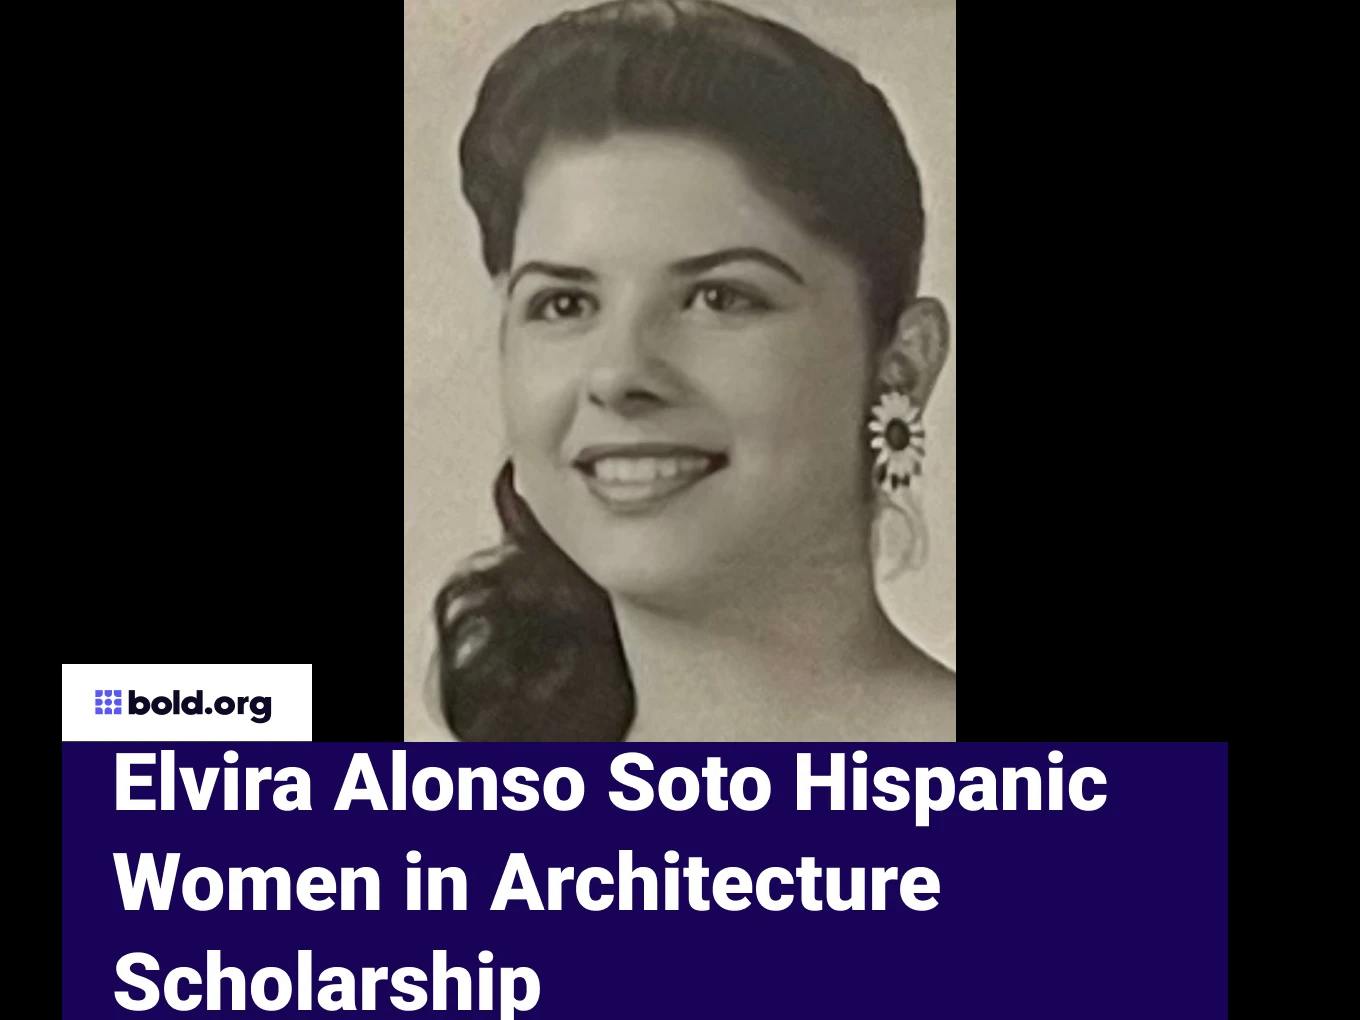 Elvira Alonso Soto Hispanic Women in Architecture Scholarship